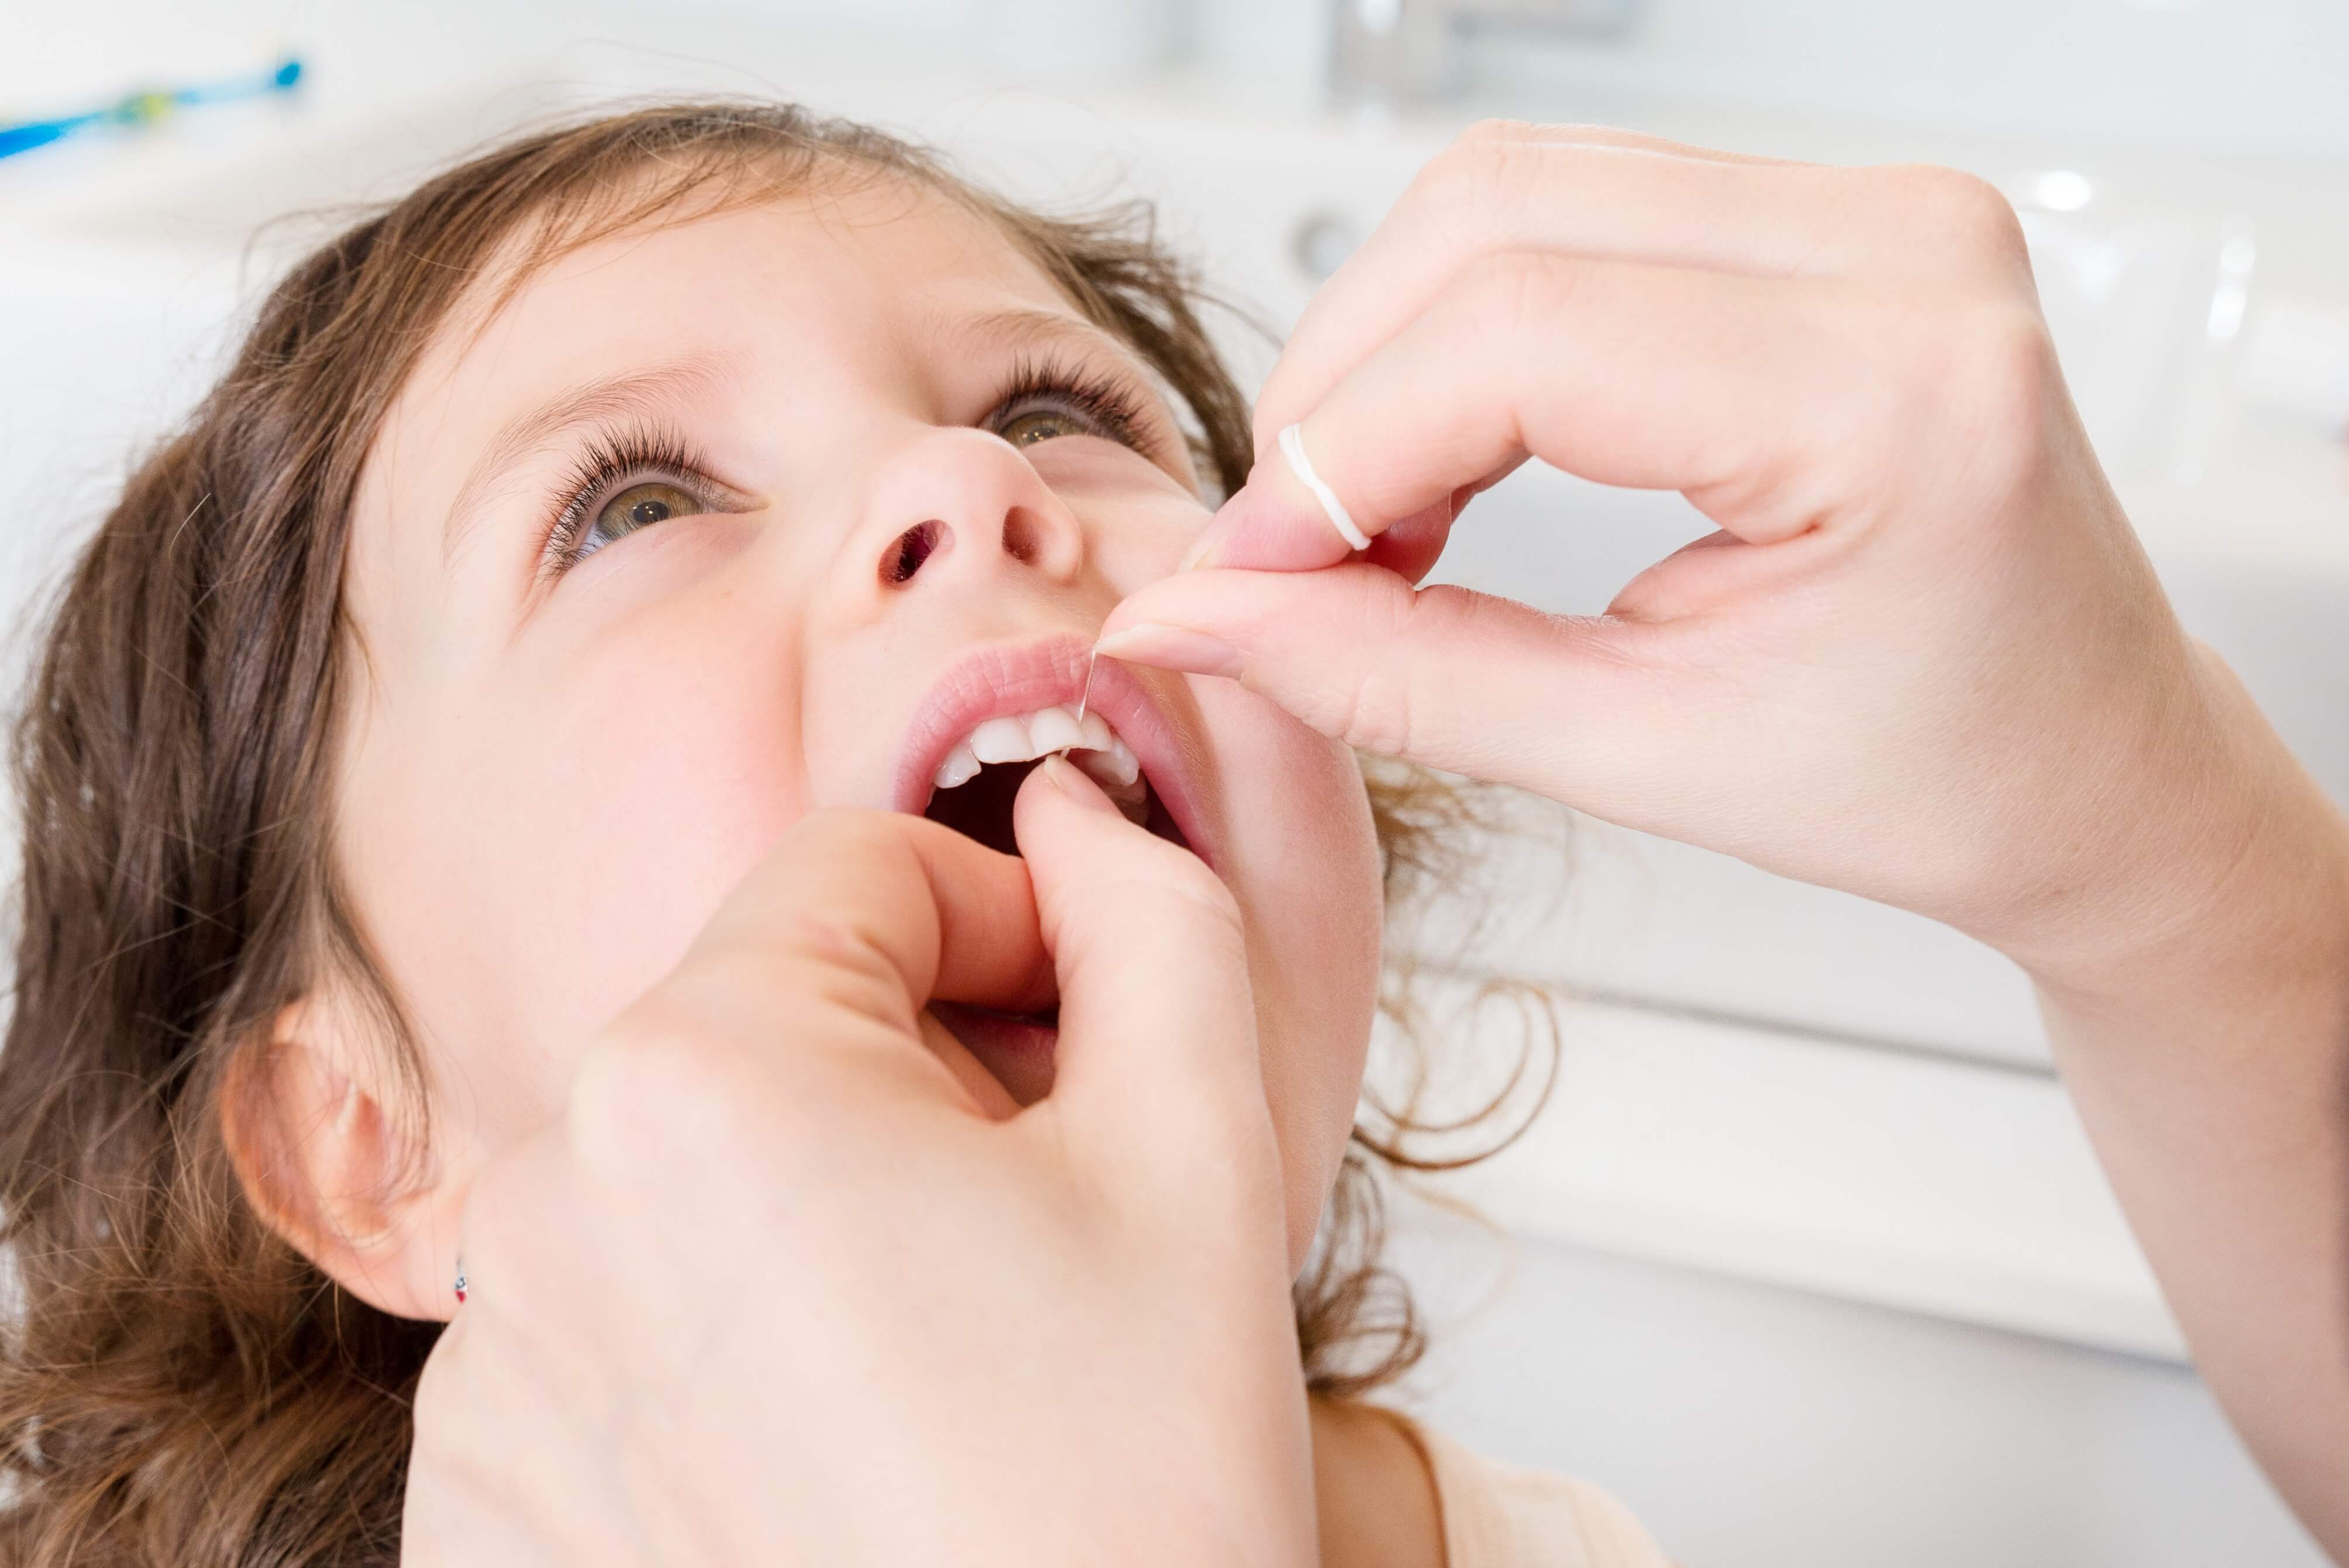 childrens-dental-care-tips-park-dental